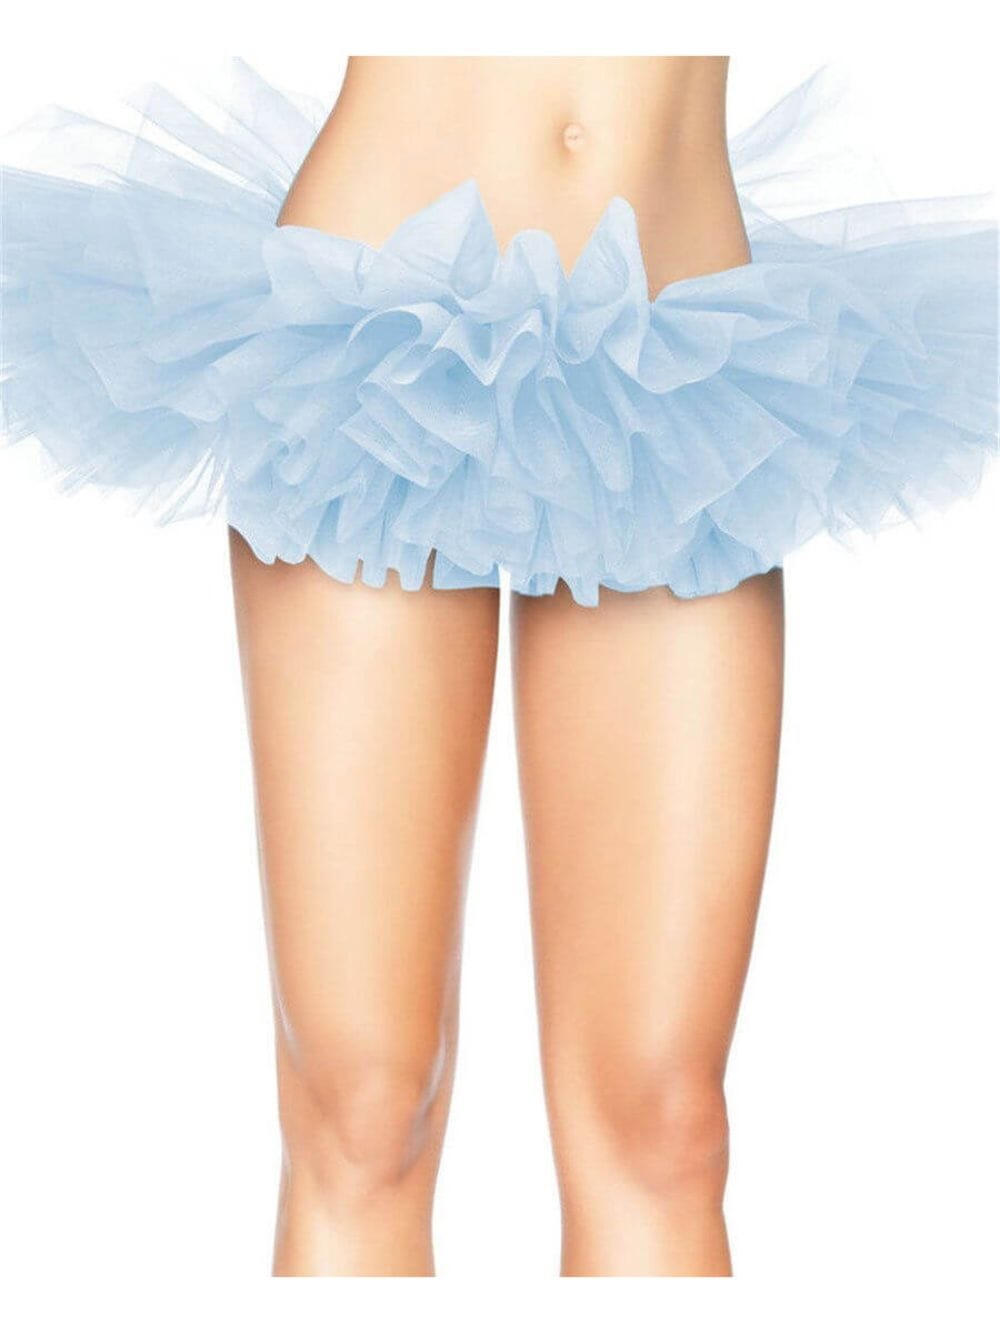 Light Blue - 5 Layer Tutu Skirt for Running, Dress-Up, Costumes - Sydney So Sweet